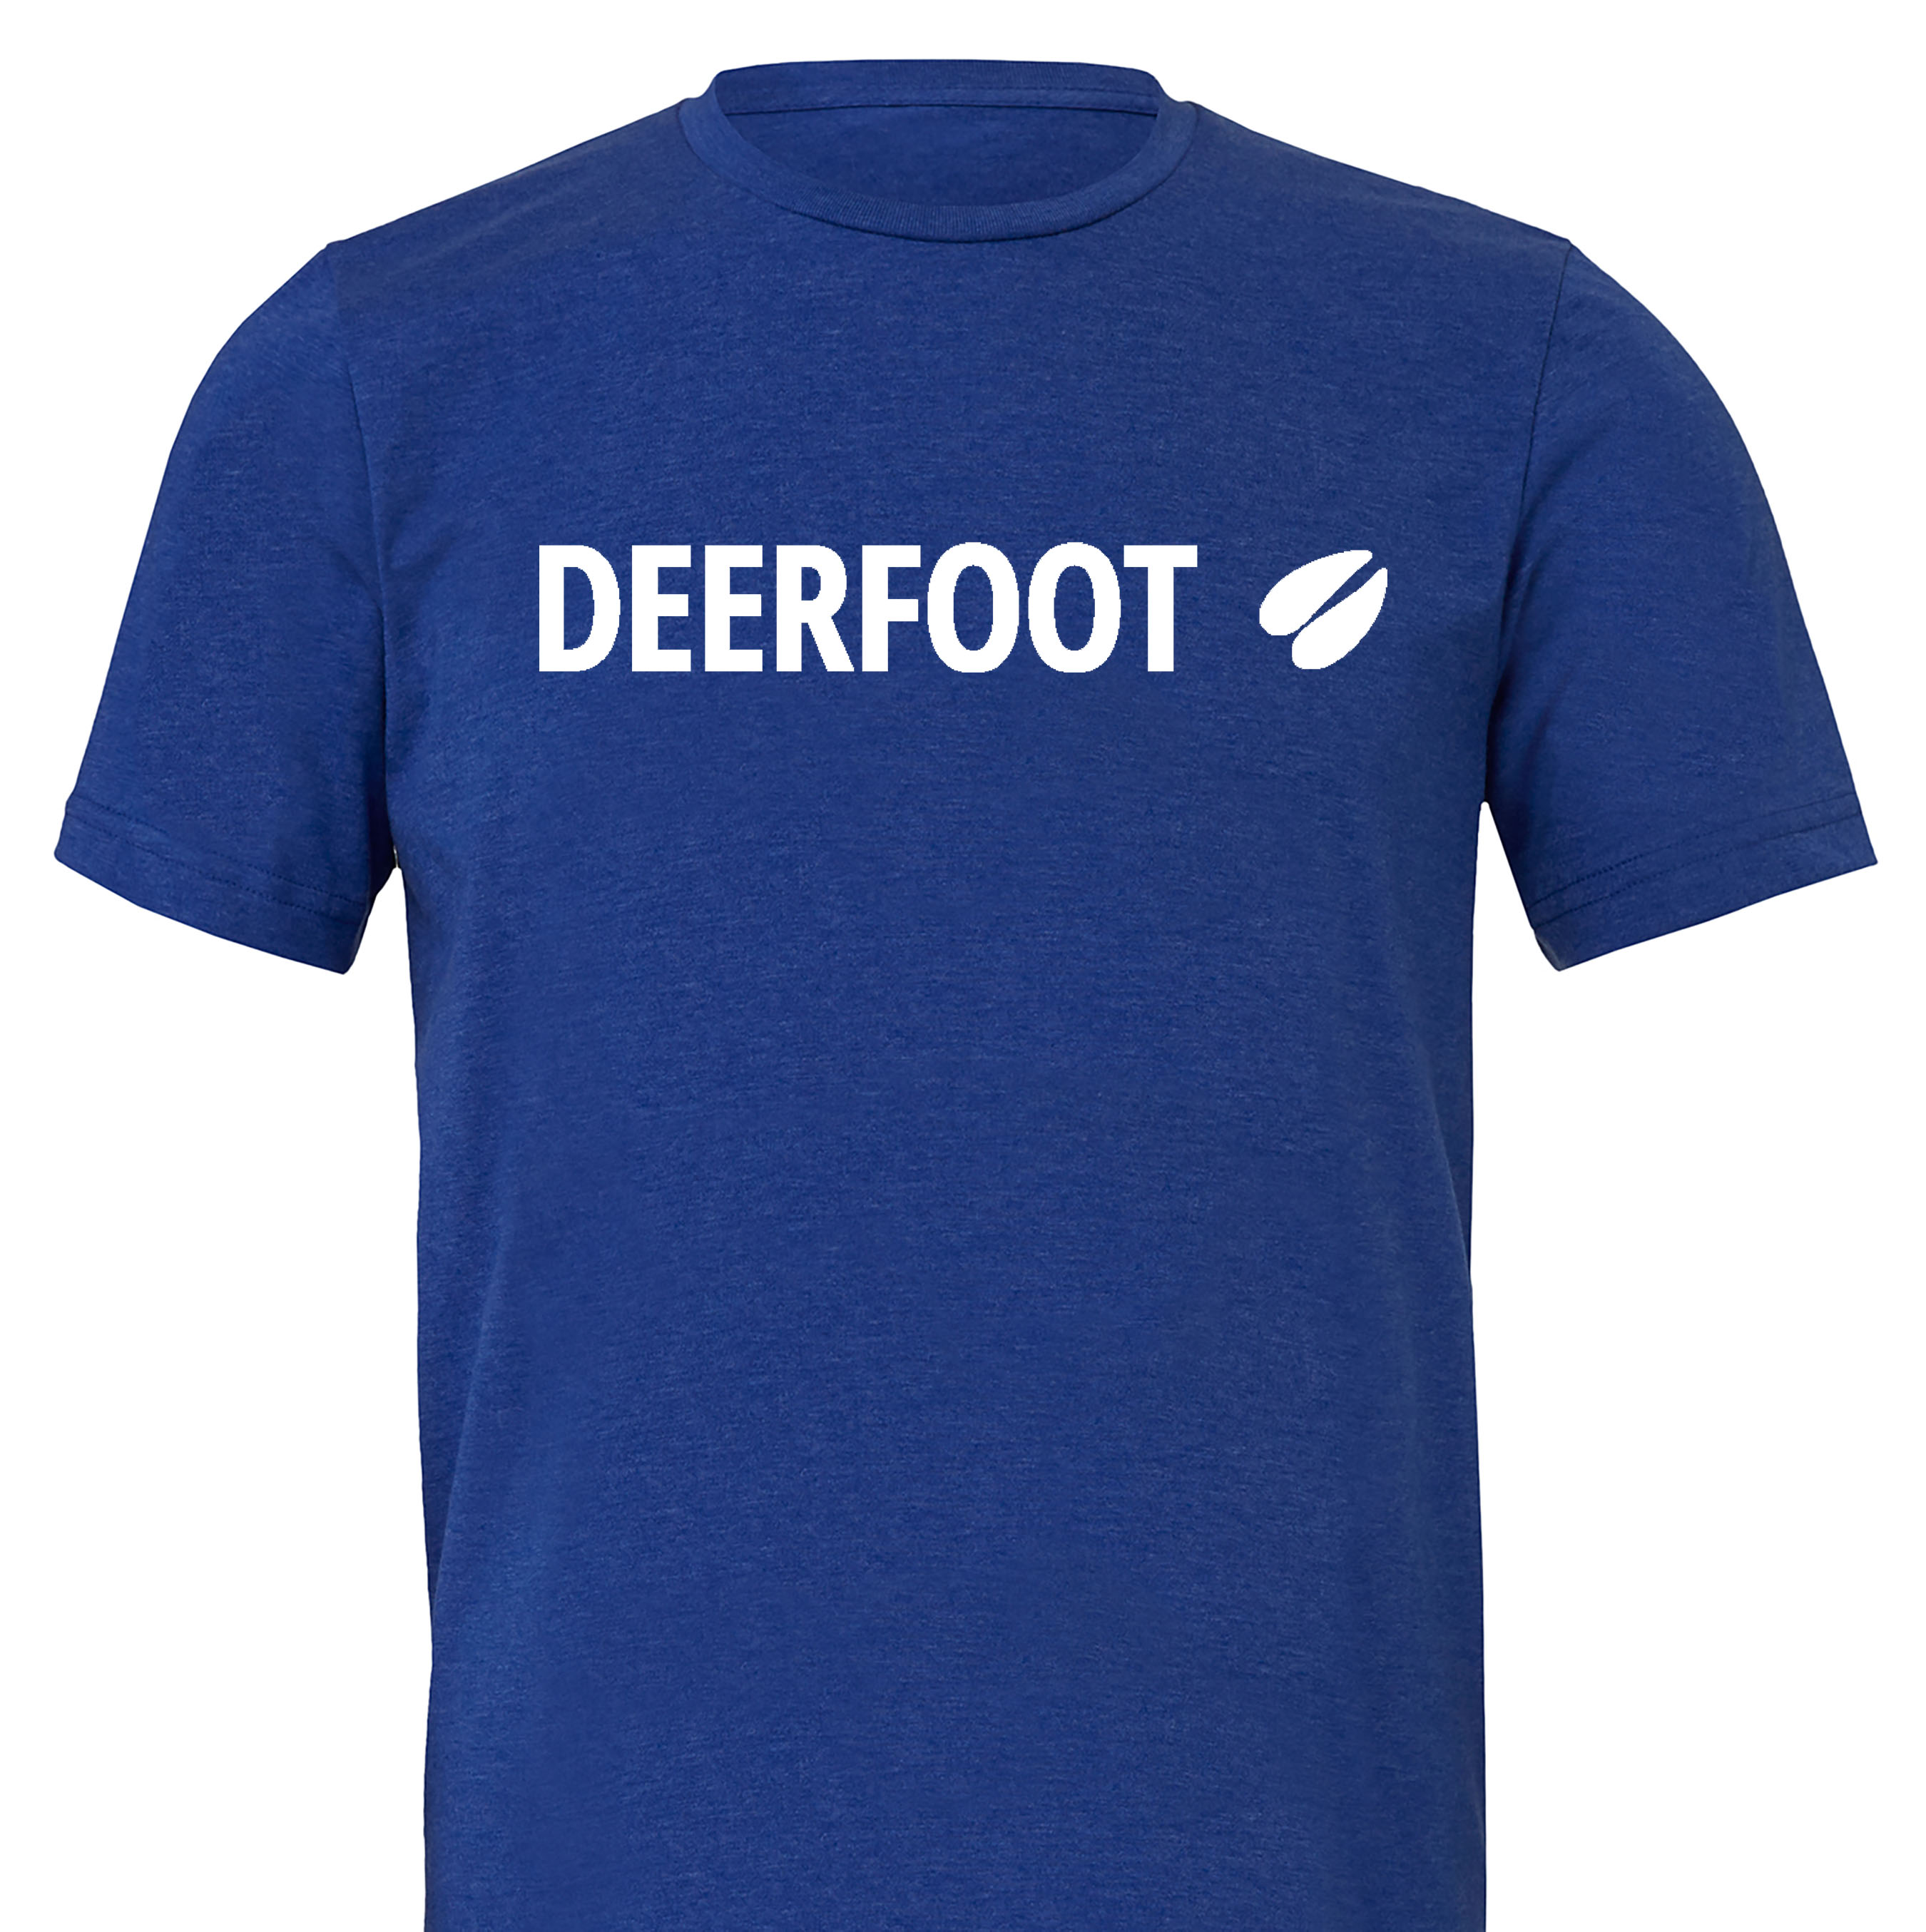 Deerfoot Logo on True Royal Shirt